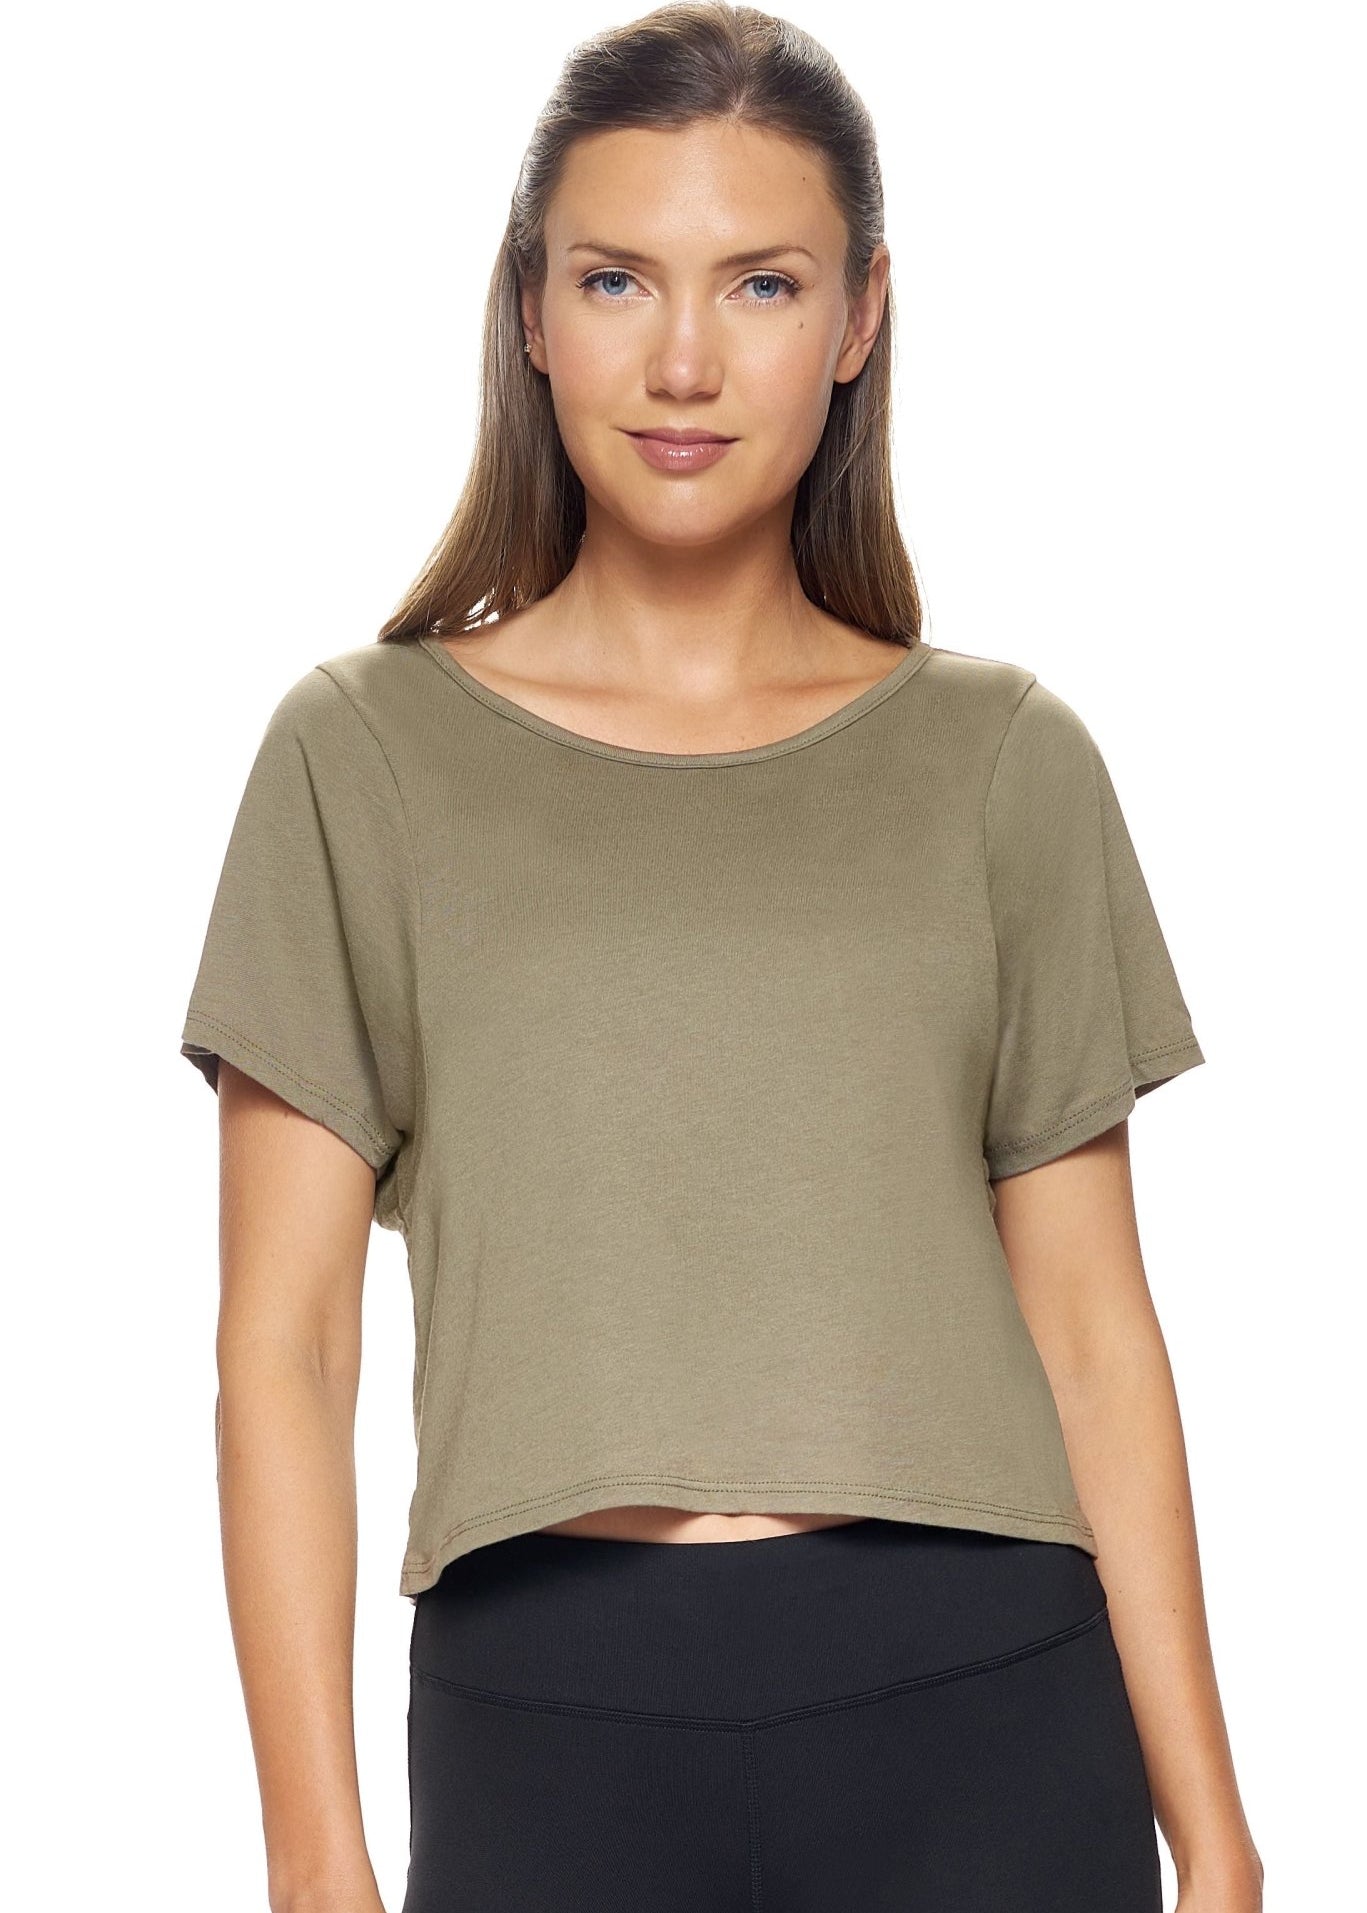 Expert Brand MoCA Plant Based Cropped T-Shirt - DressbarnActivewear